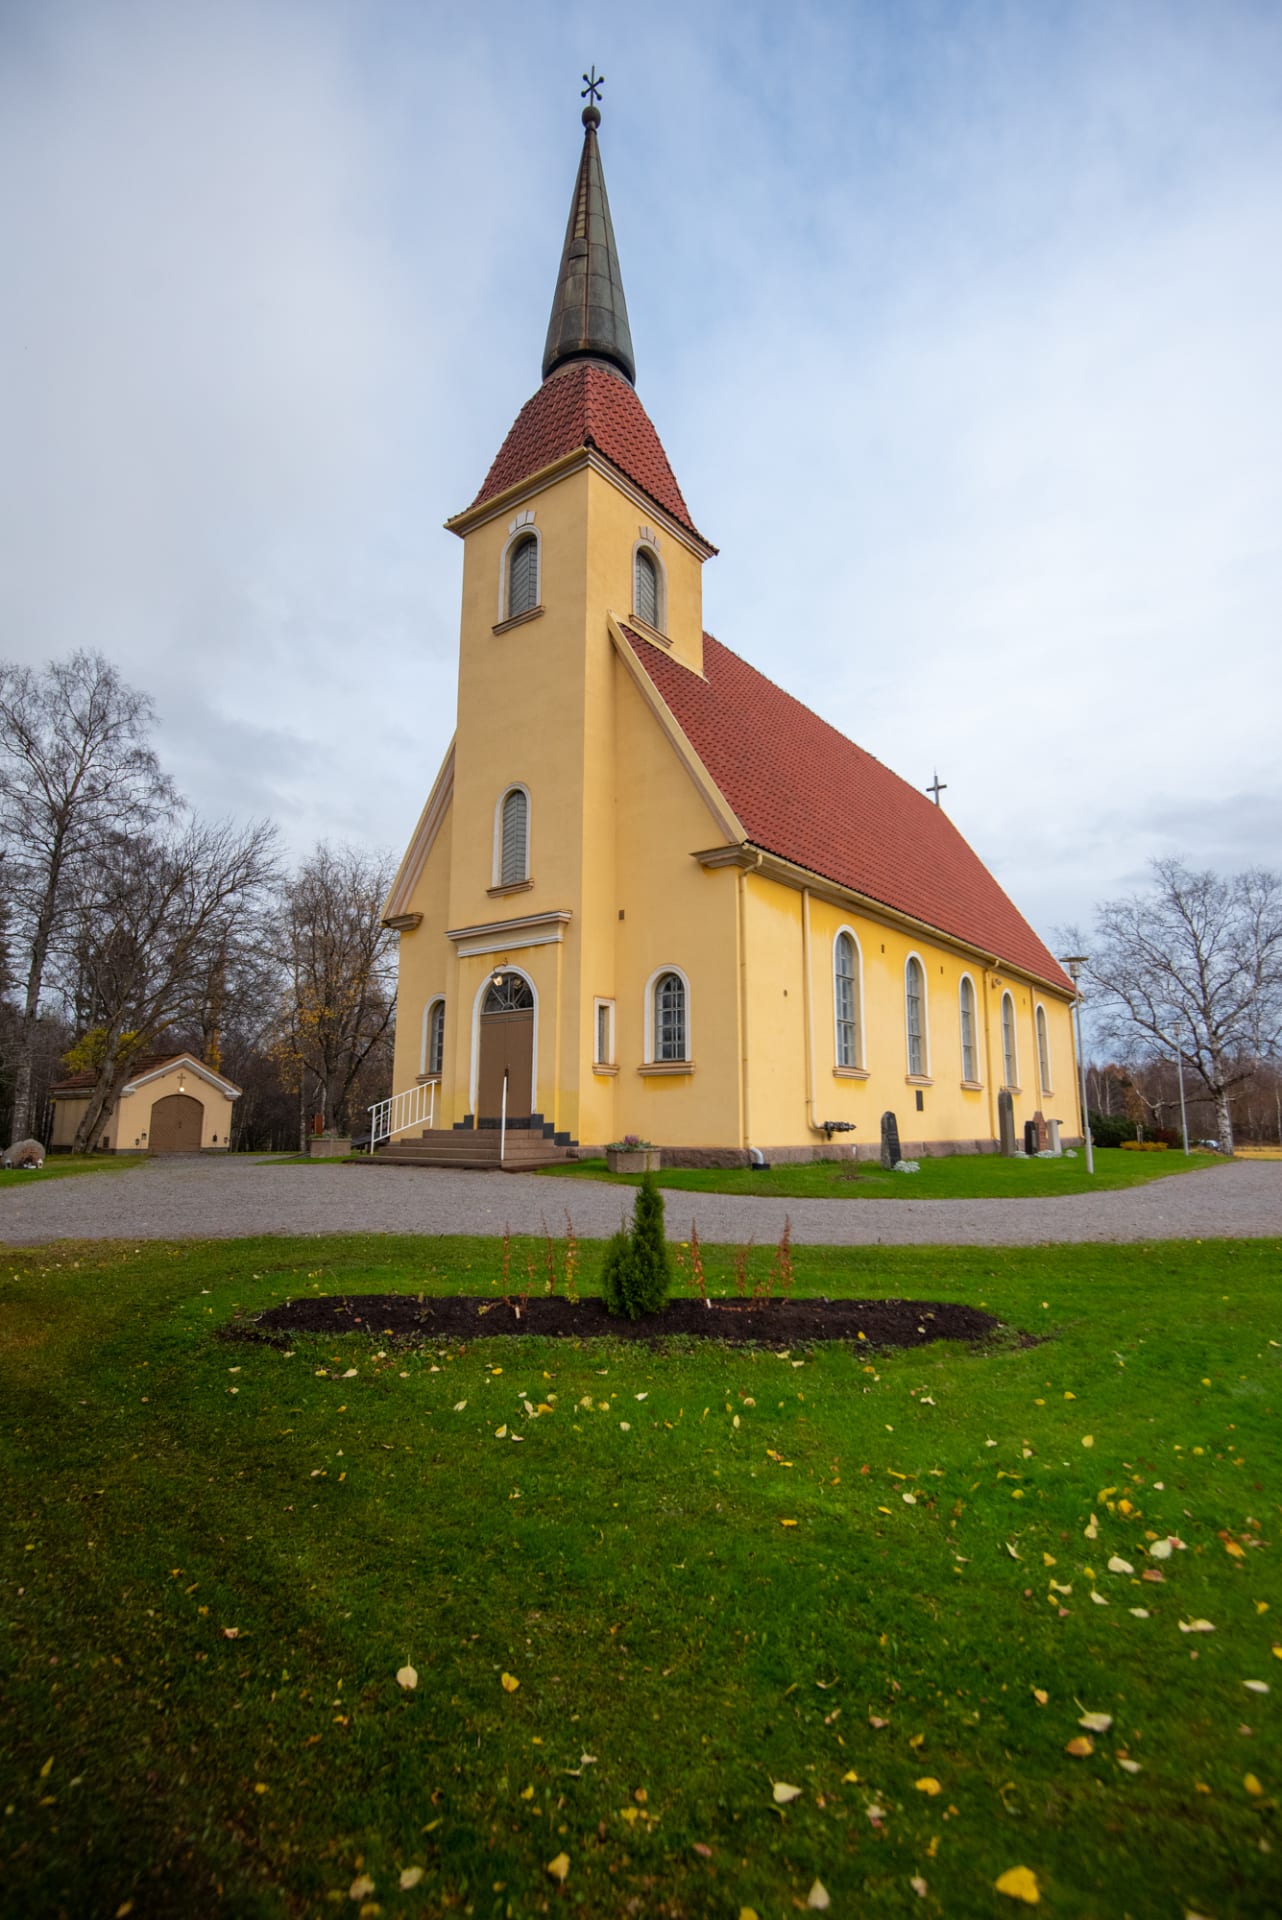 The Church of Saloinen